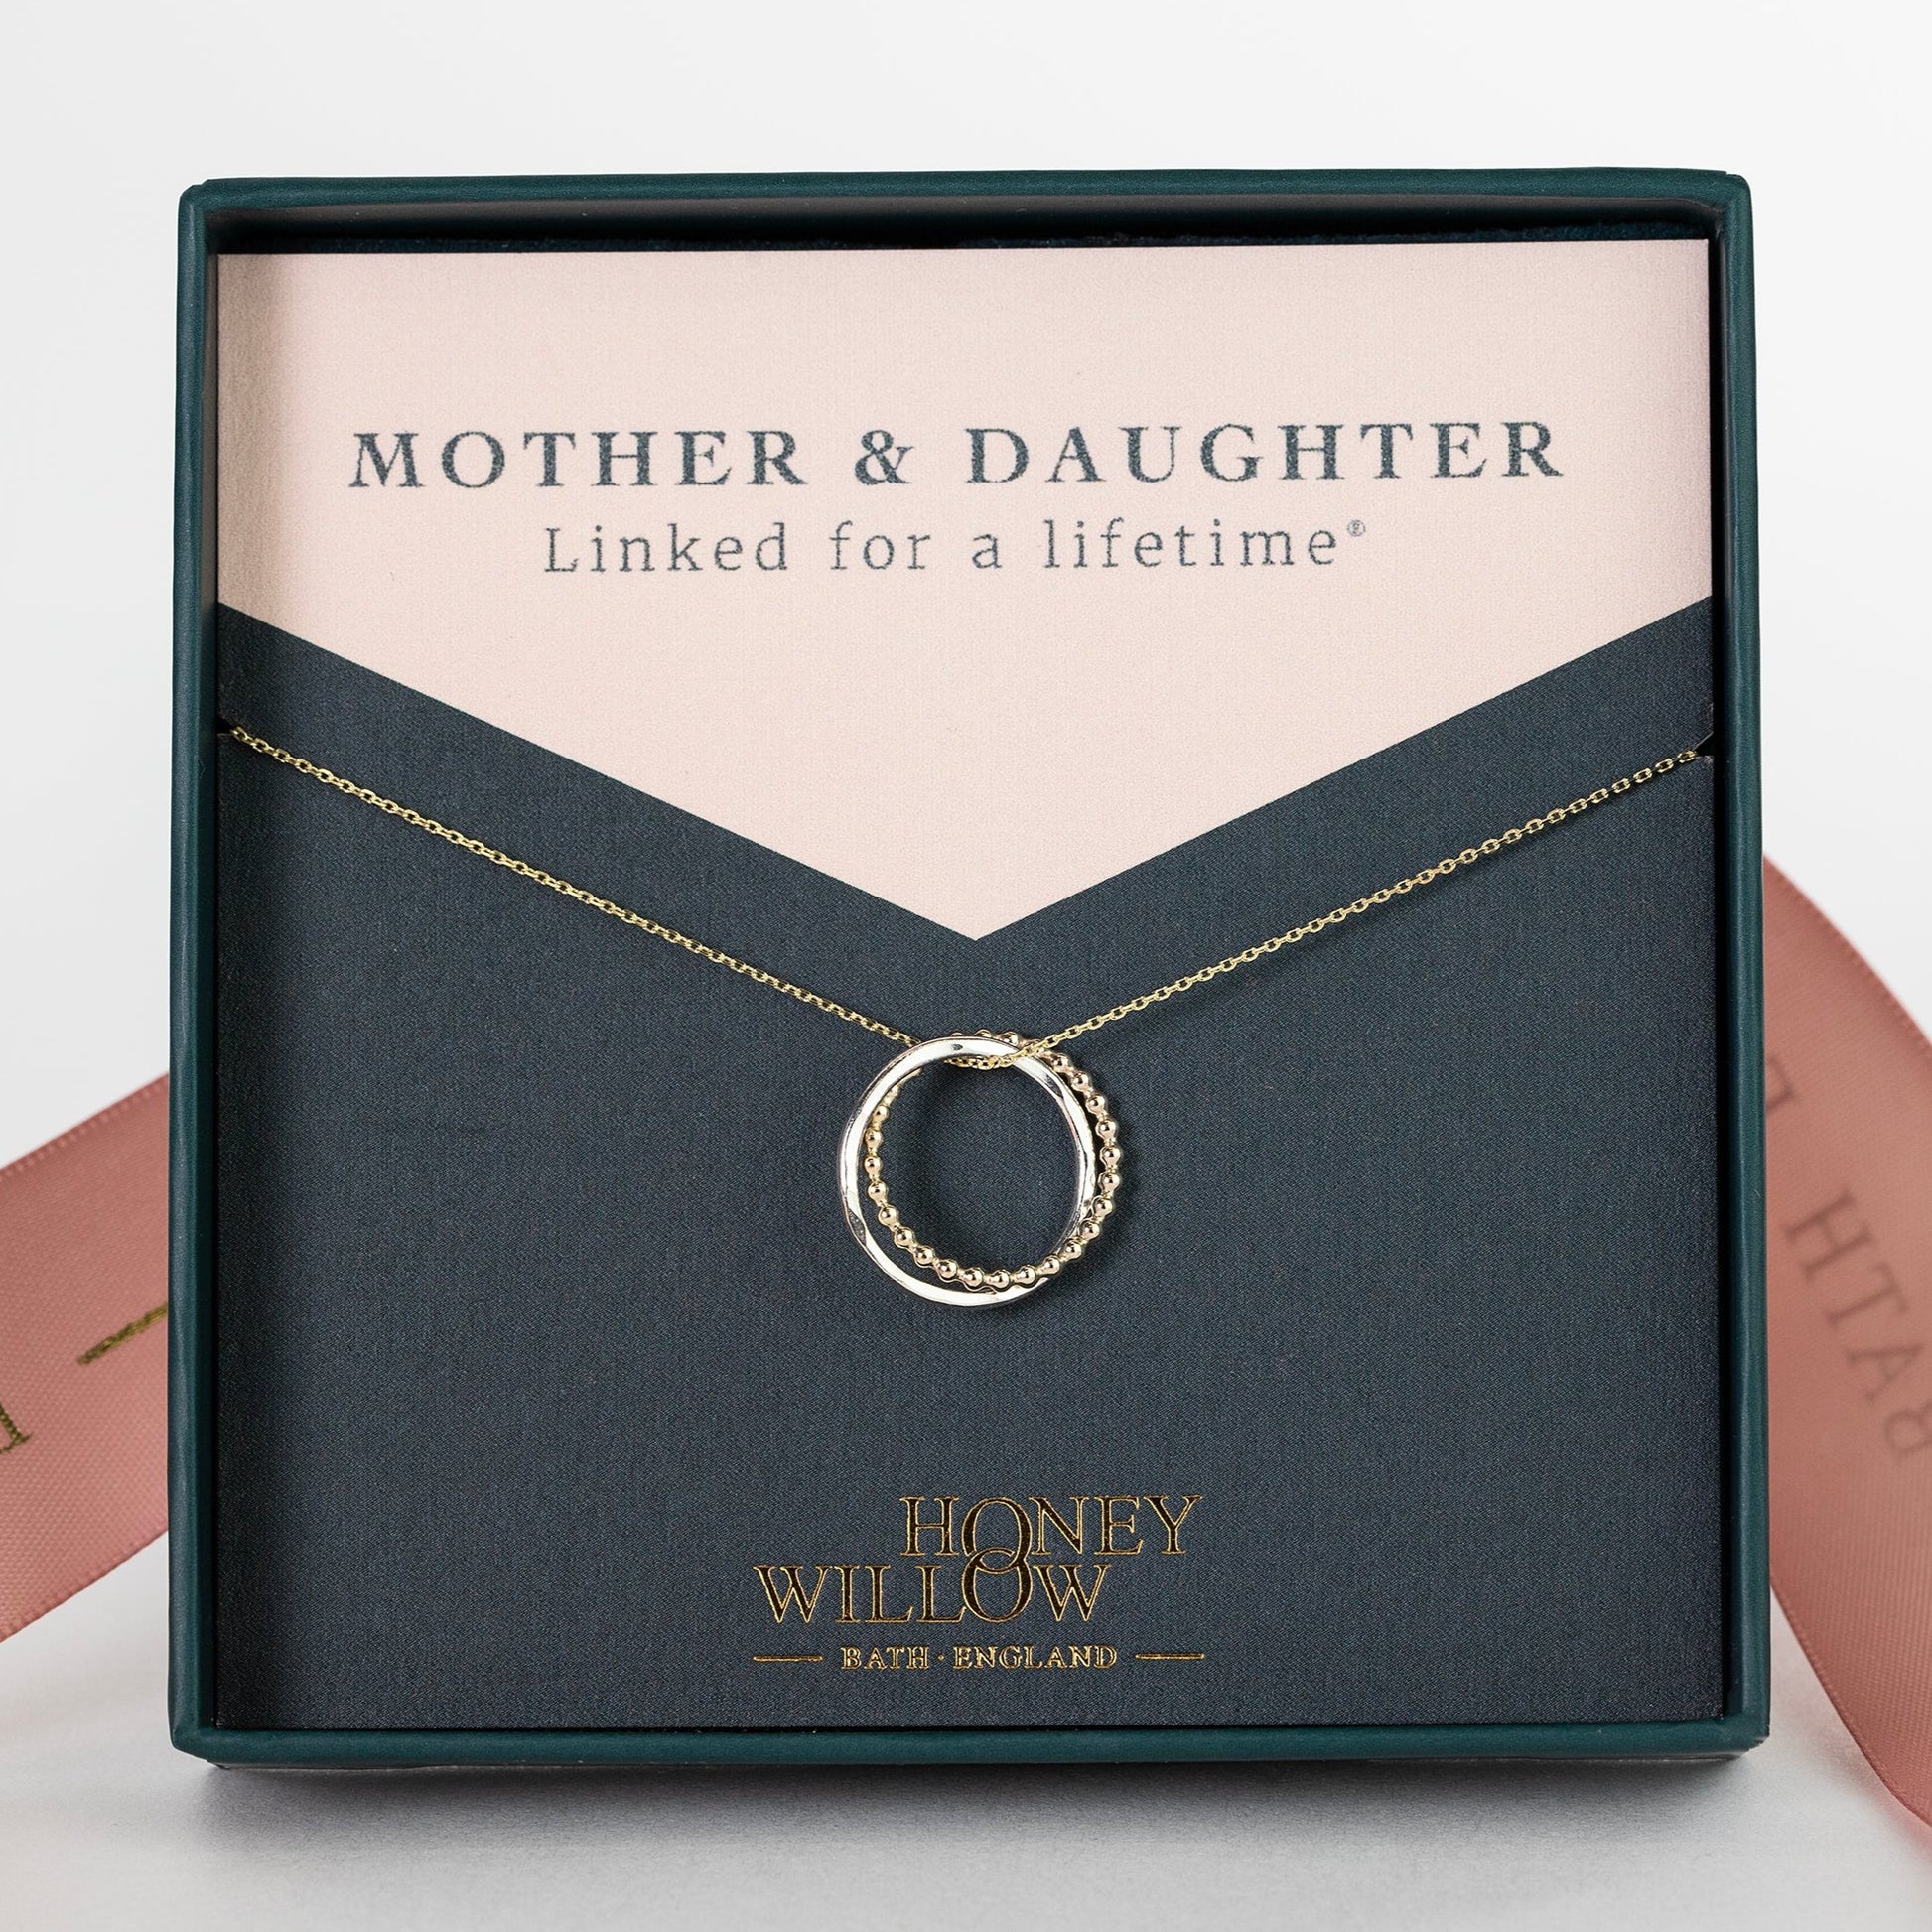 Mother & Daughter necklace 9kt gold